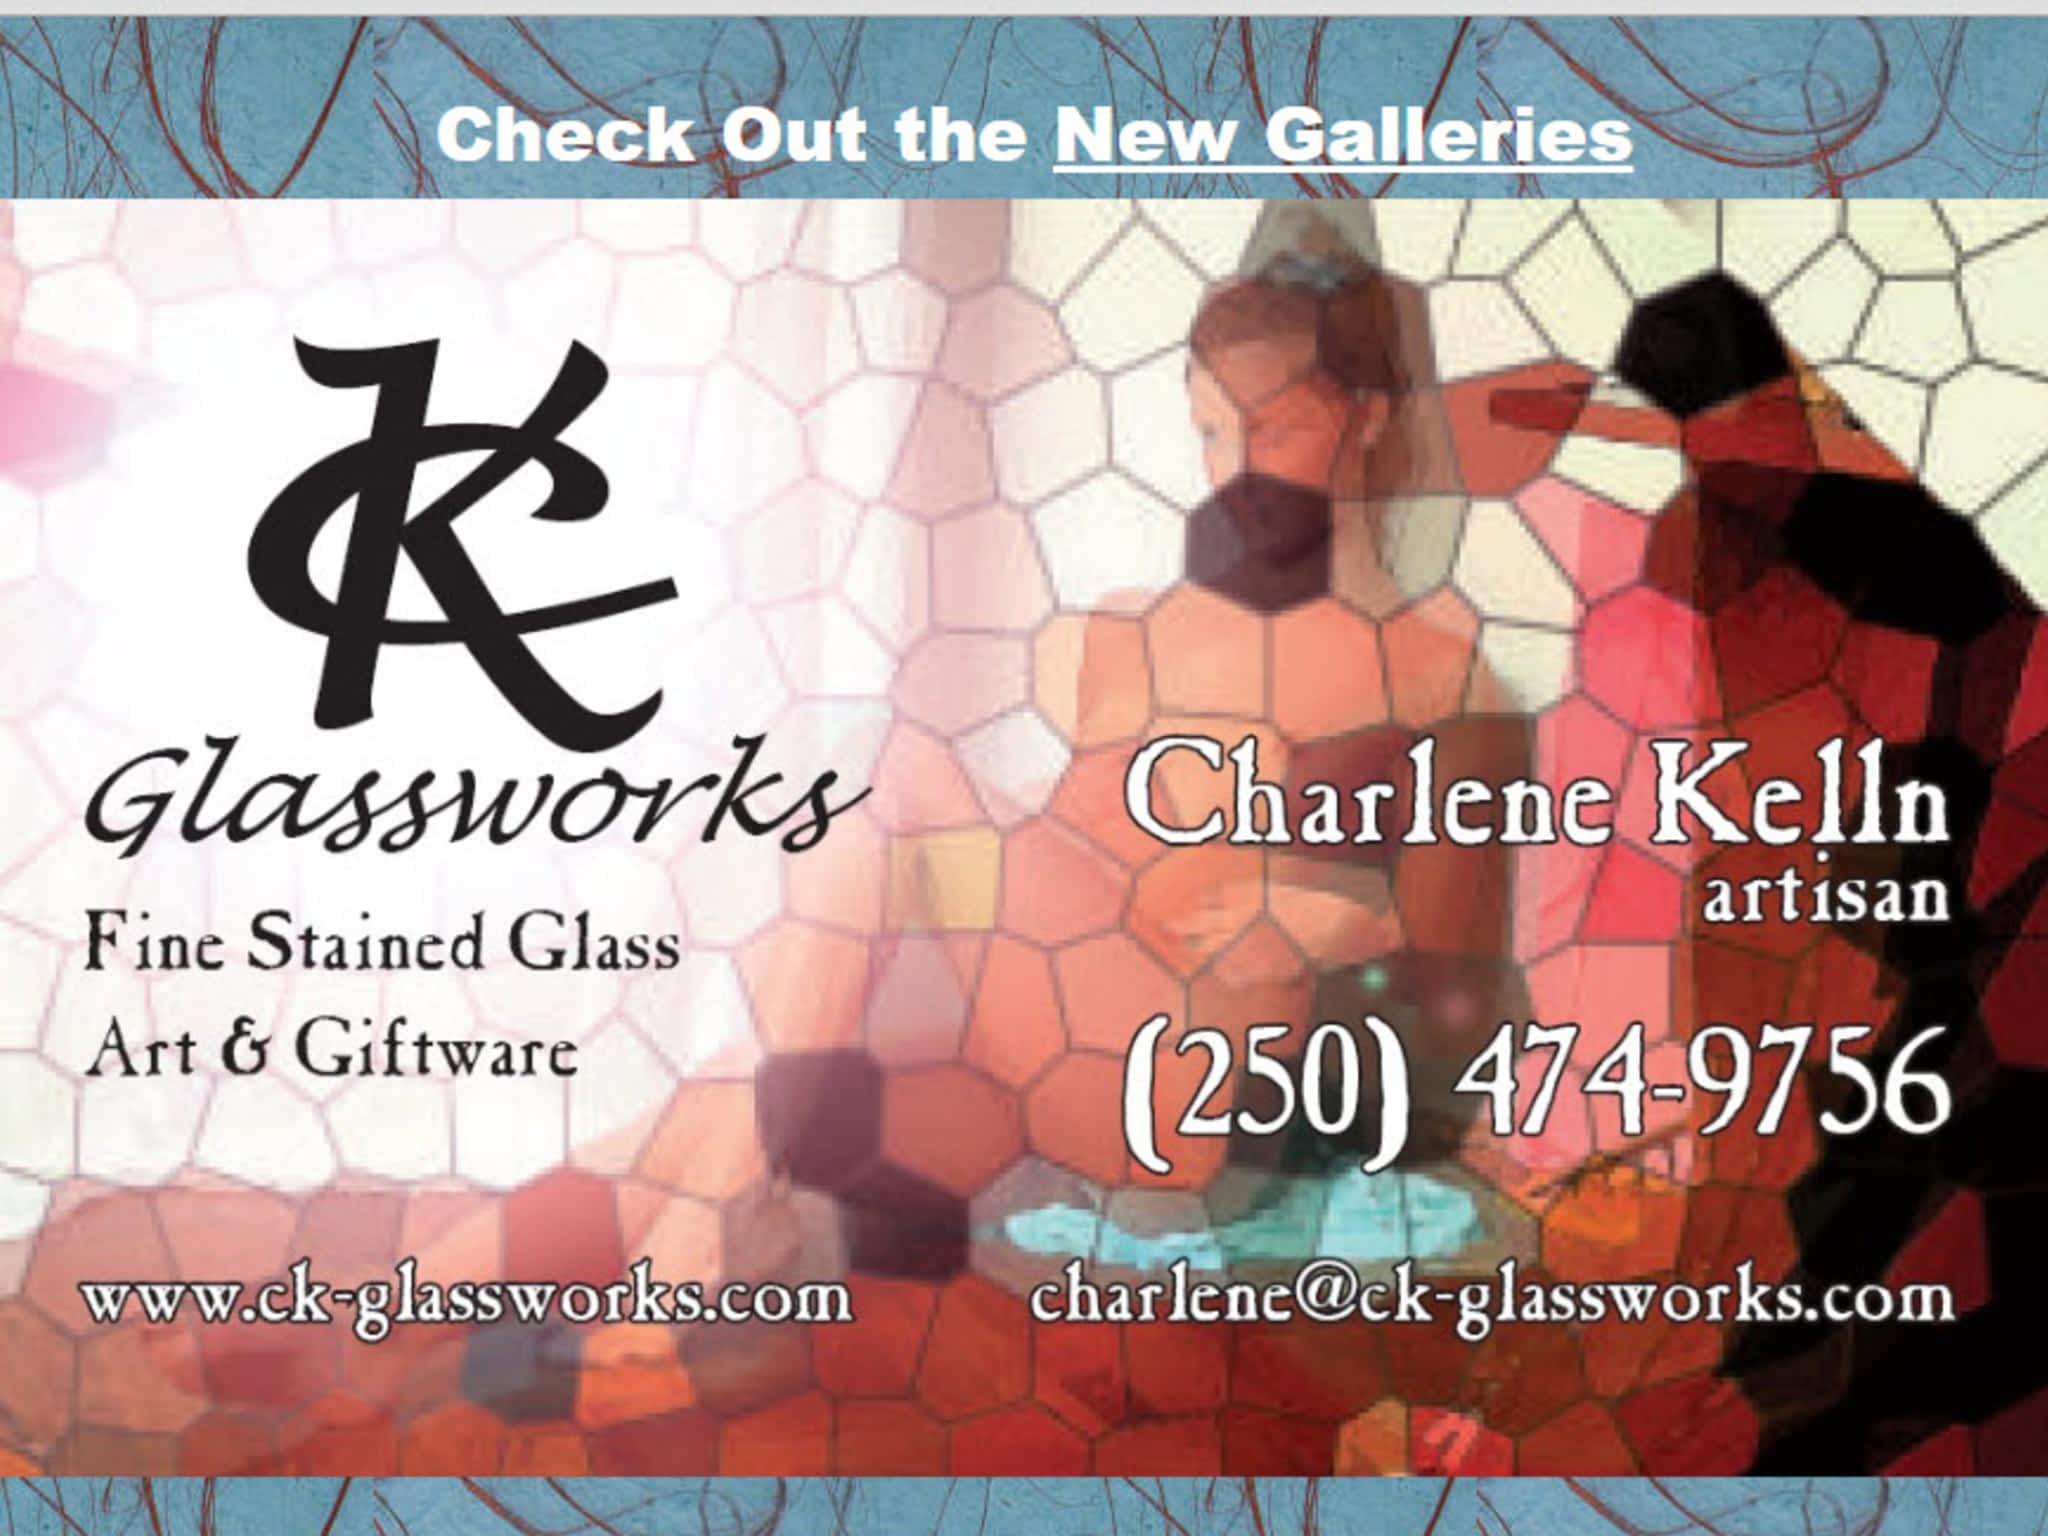 photo CK Glassworks